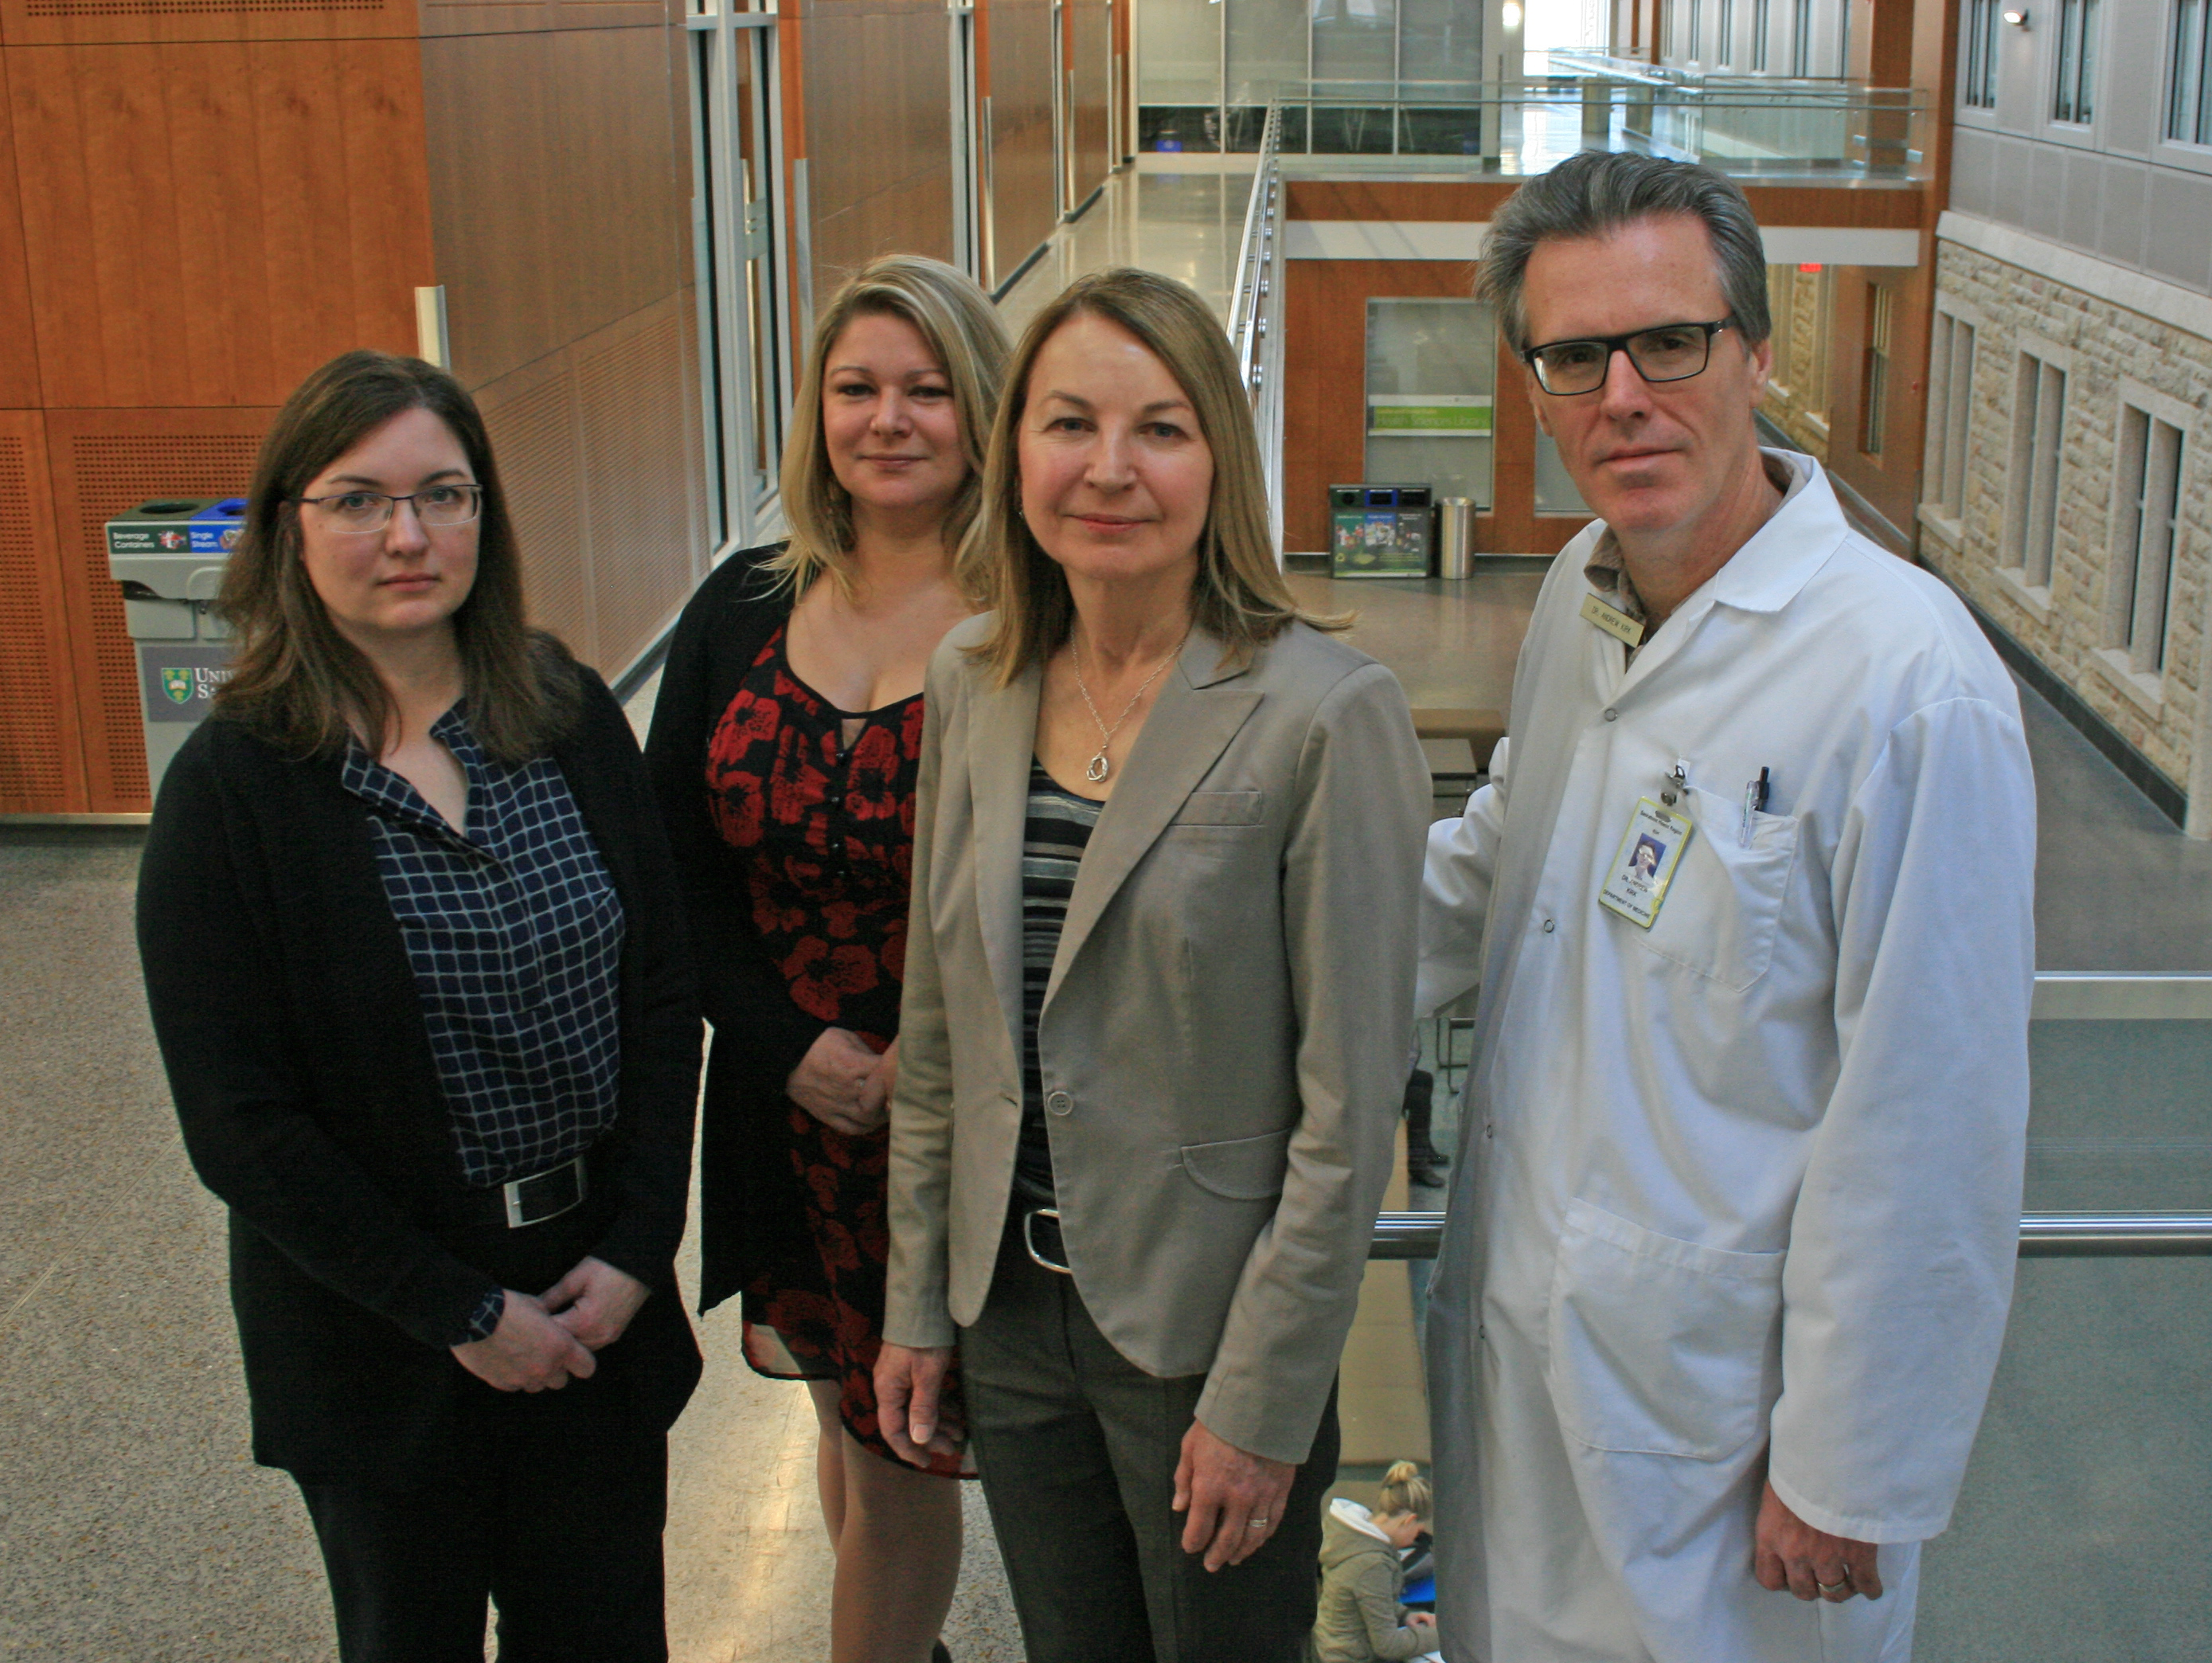 Left to right: Dr. Julie Kosteniuk, Dr. Megan O’Connell, Dr. Debra Morgan, Dr. Andrew Kirk. (Photo: Michael Robin)